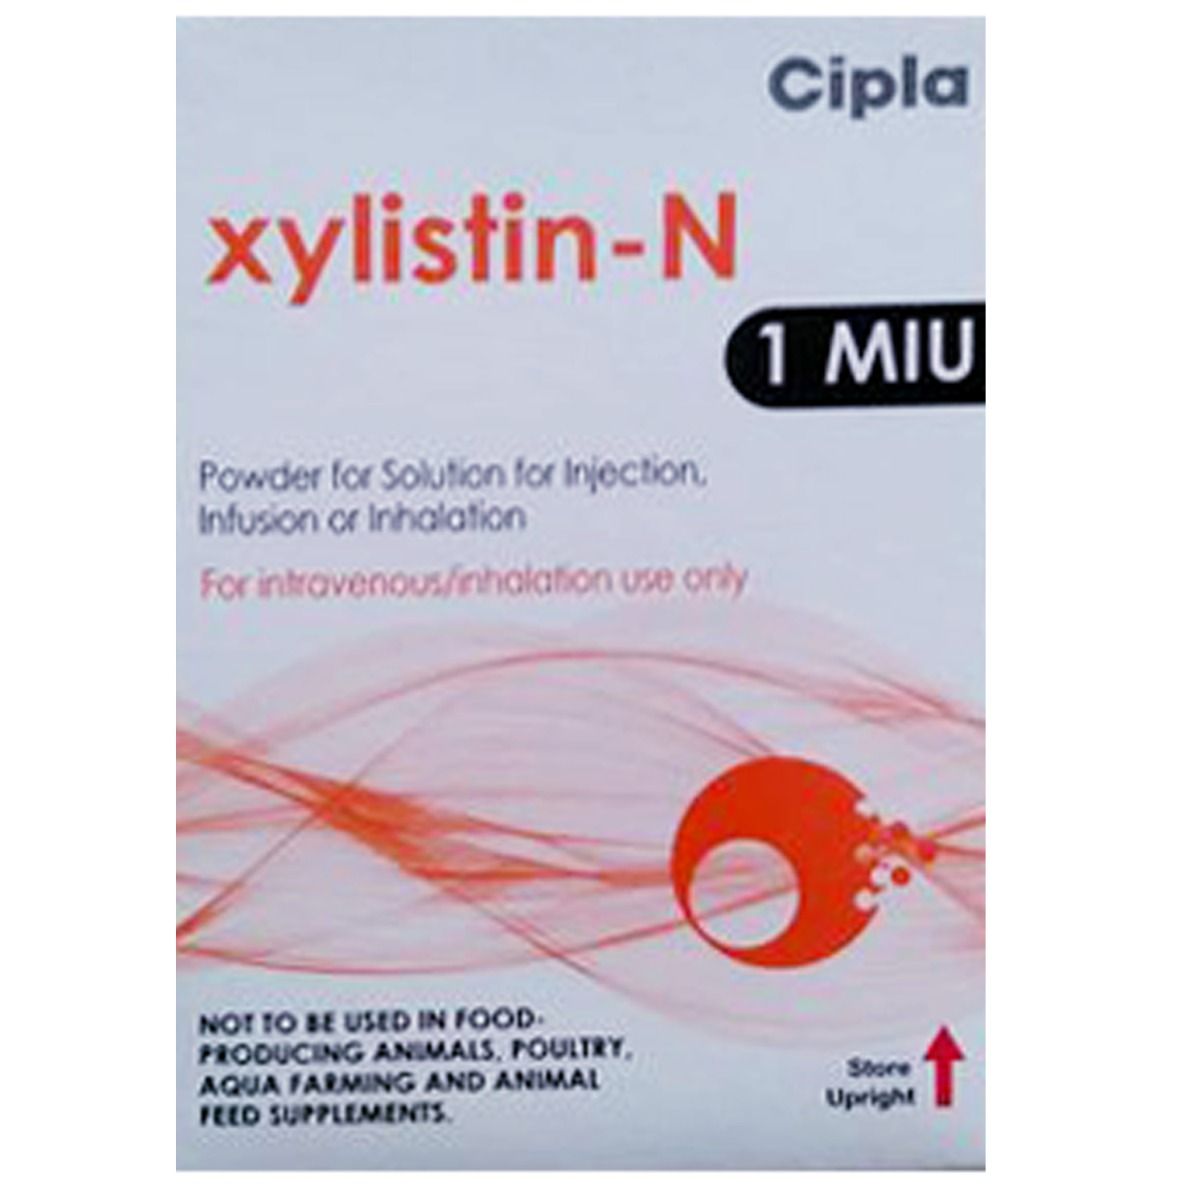 Buy Xylistin N 1MIU Injection 1's Online